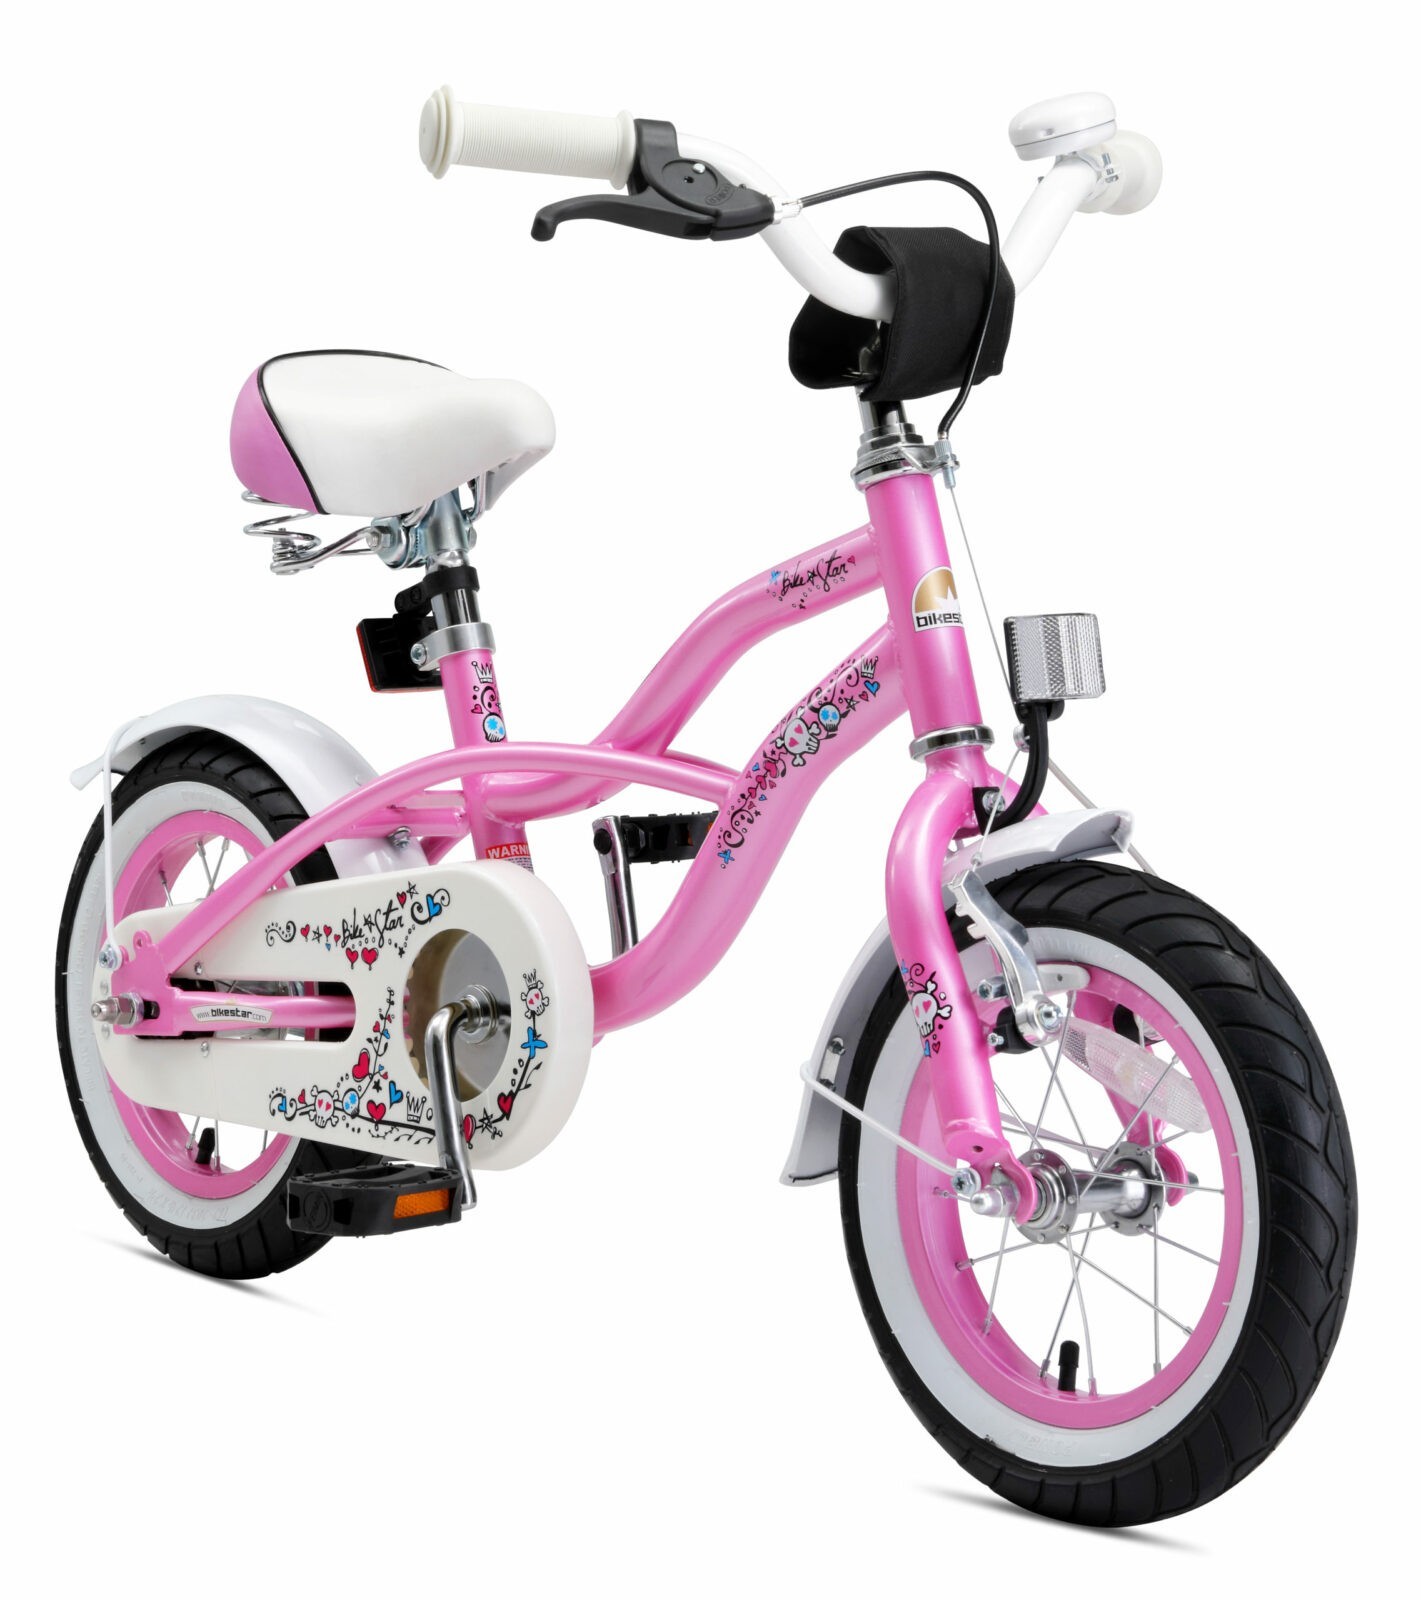 Controle Retoucheren Attent Bikestar, Cruiser kinderfiets, 12 inch, roze - Fietsdirect